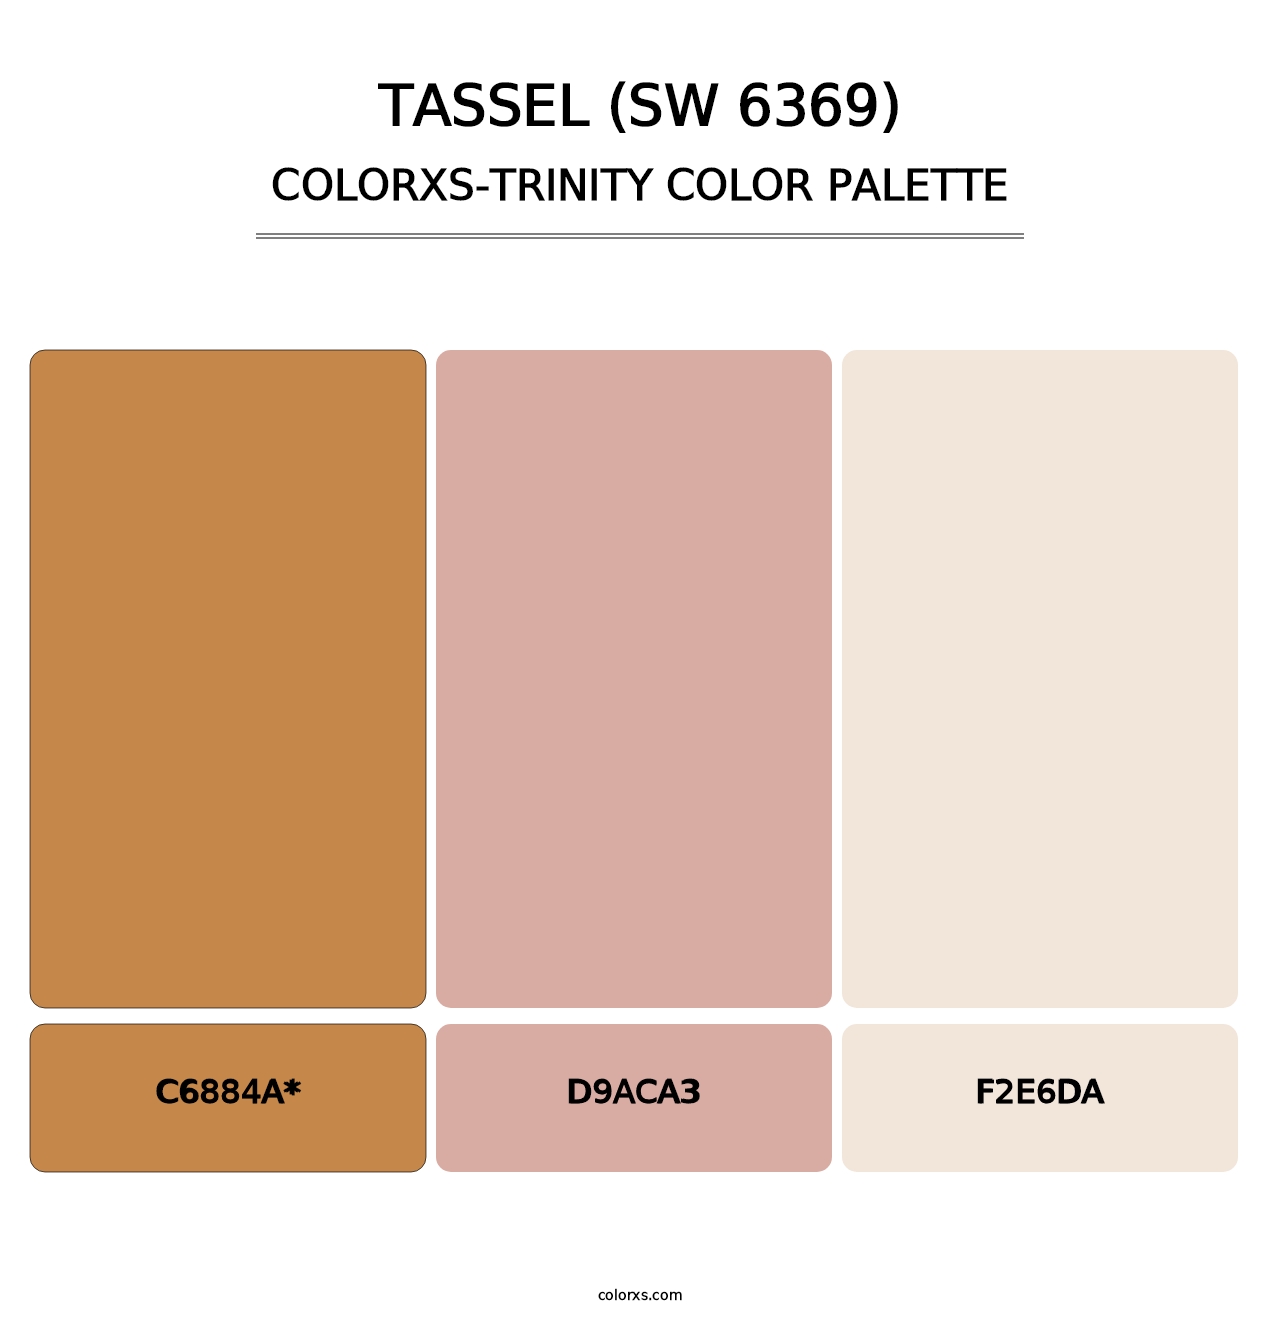 Tassel (SW 6369) - Colorxs Trinity Palette